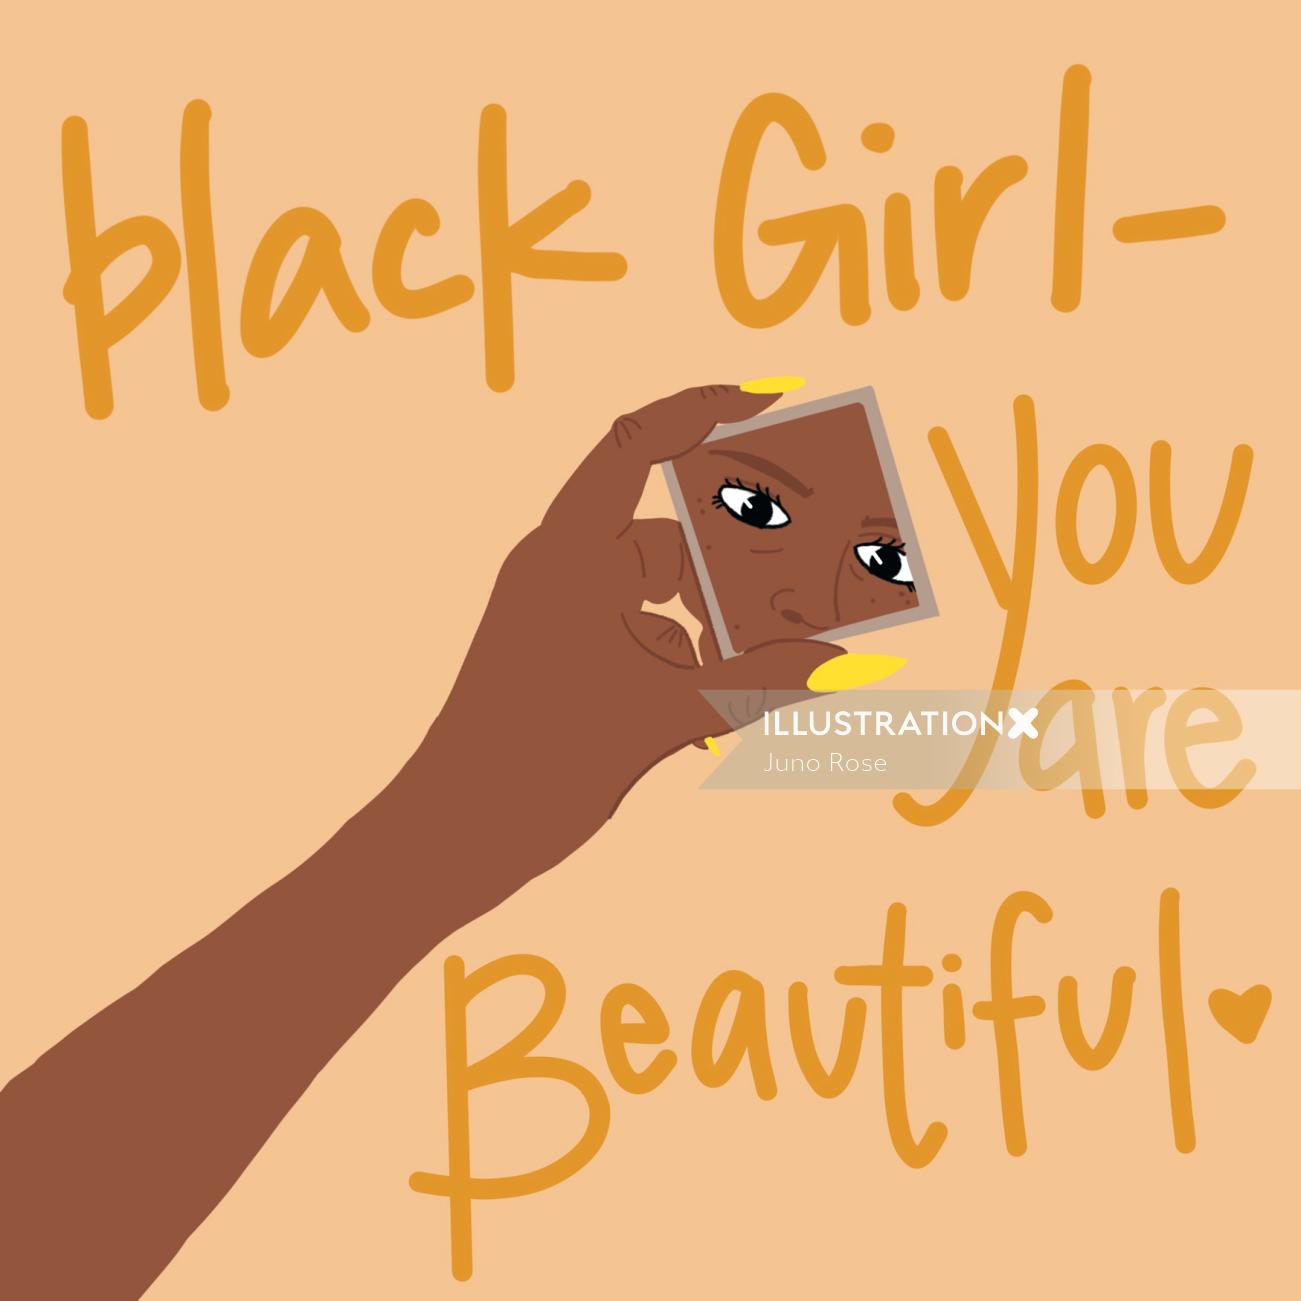 Beautiful black girl illustration